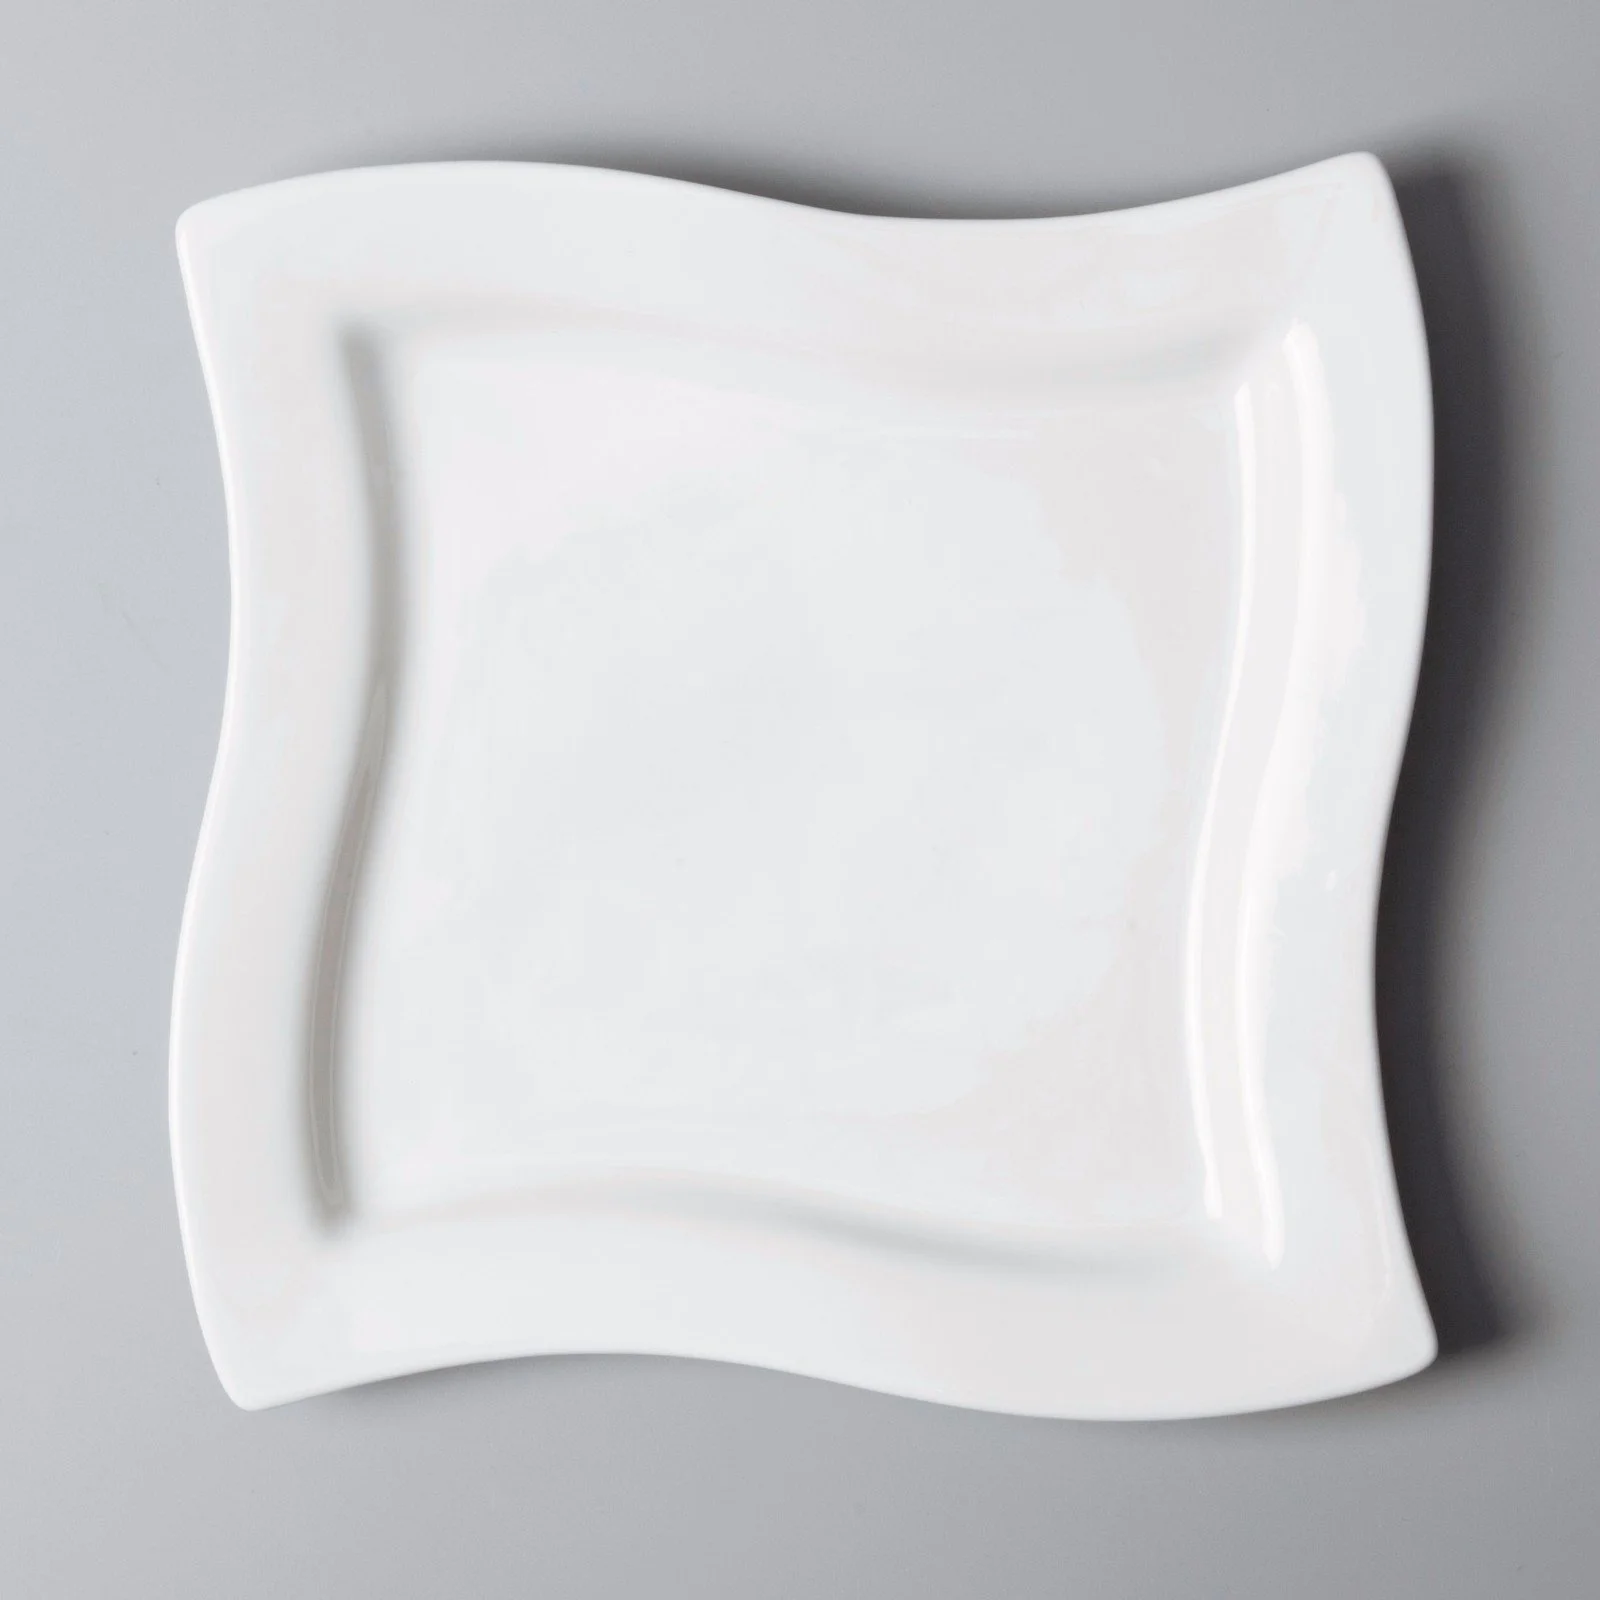 white porcelain tableware modern dinnerware smoothly Two Eight Brand